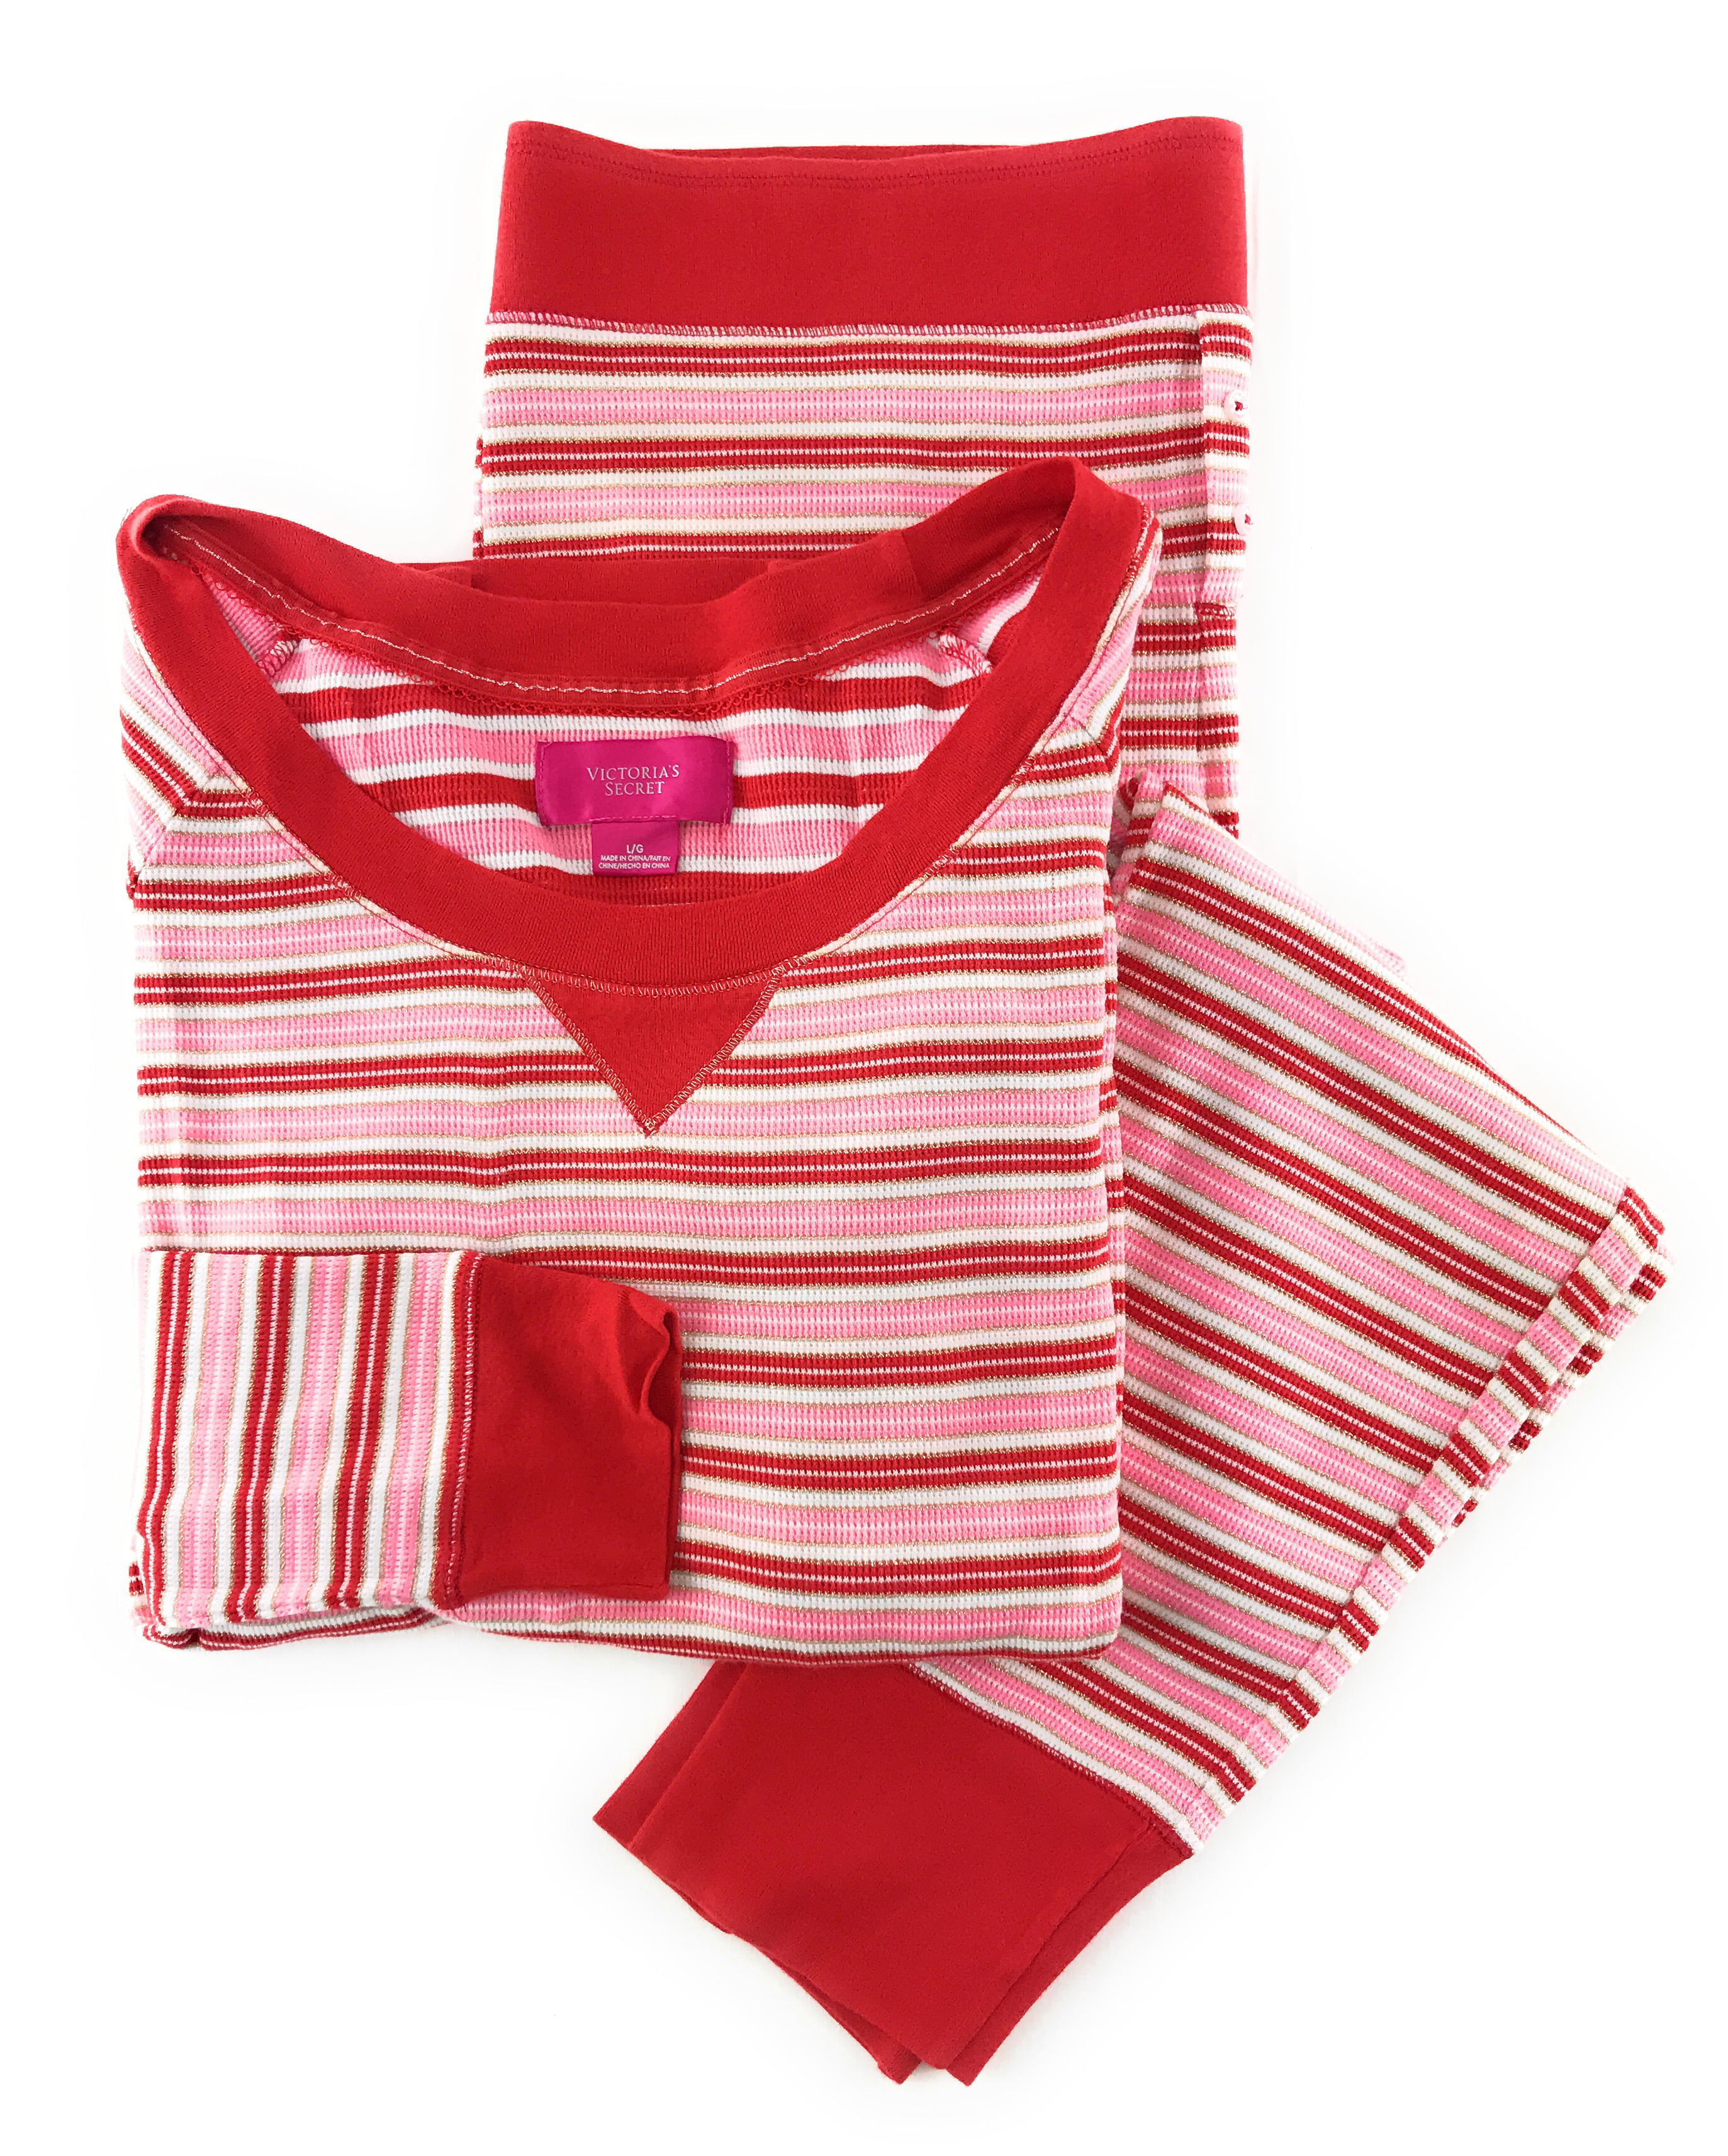 Victoria's Secret Pink Stripe SMALL Fireside Long Sleeve Sleepshirt Dress Pajama 